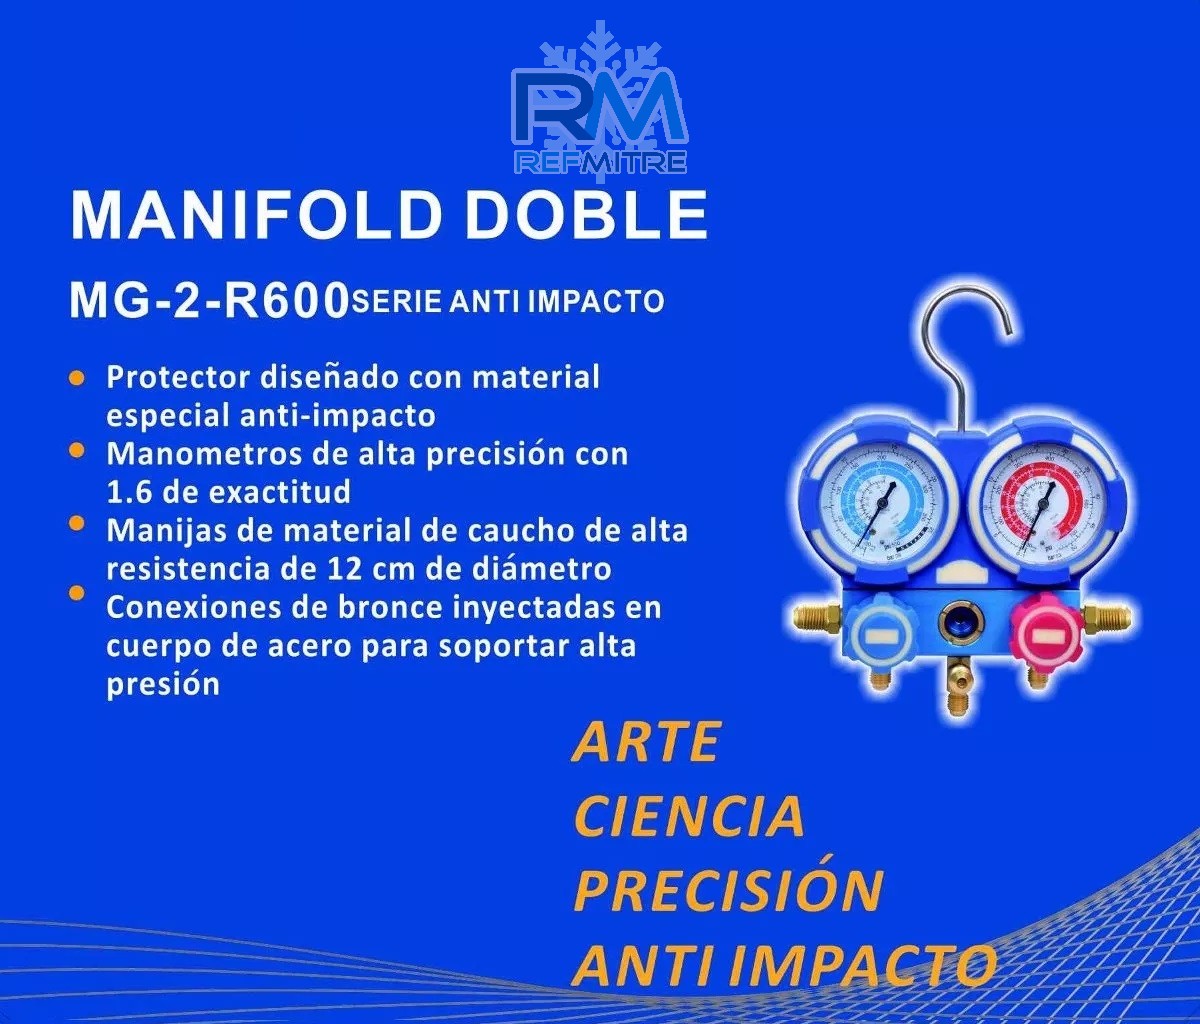 MANIFOLD DOBLE REFMITRE R600 - MG-2-R600